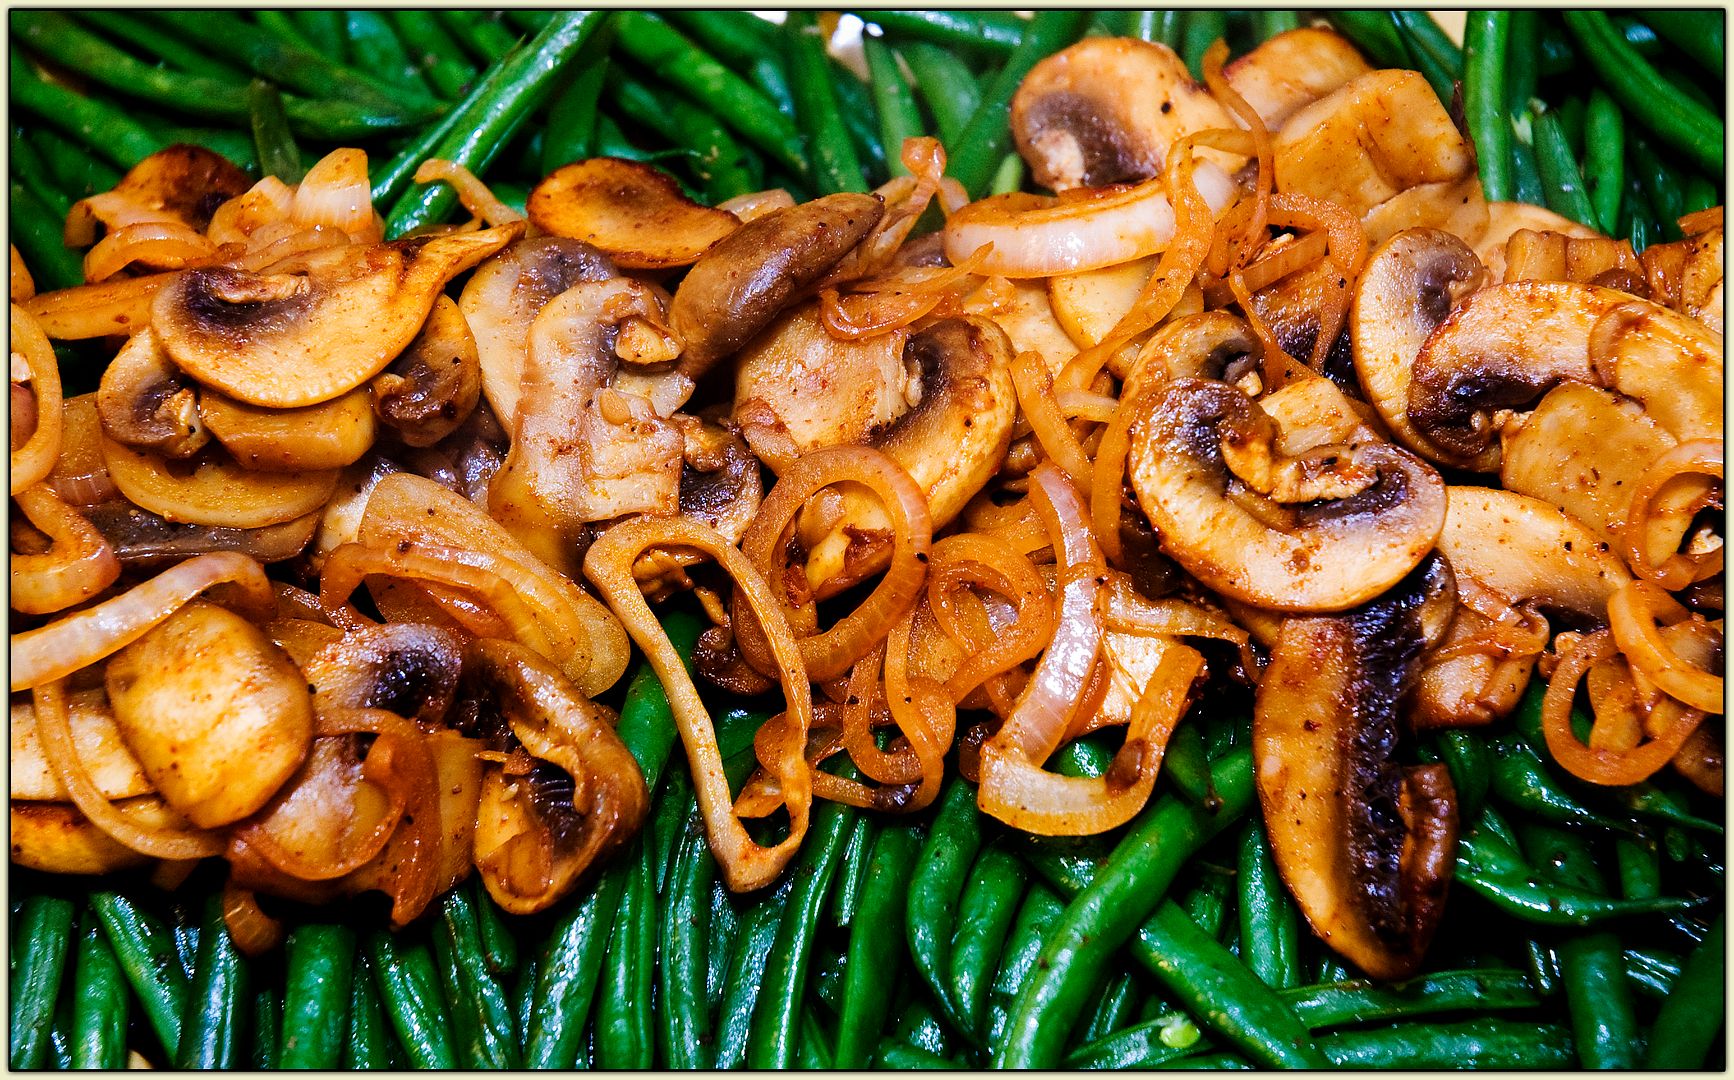 Green Beans with Sautéed Mushrooms